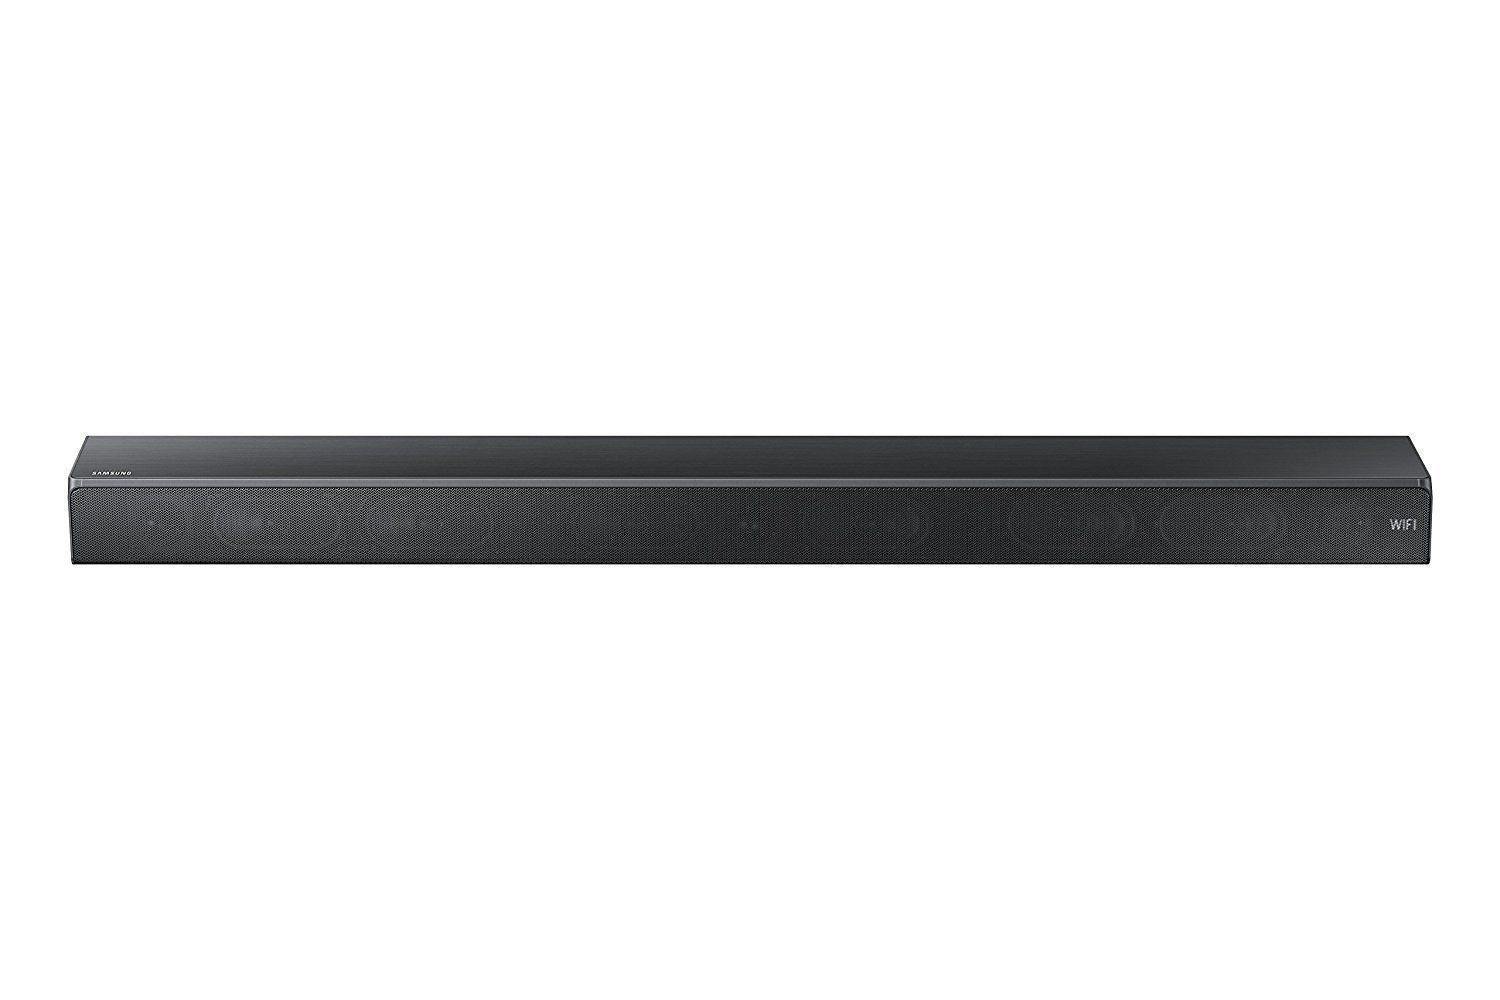 Samsung Sound+ Premium Sound Bar (HW-MS650/ZA), Works with Alexa